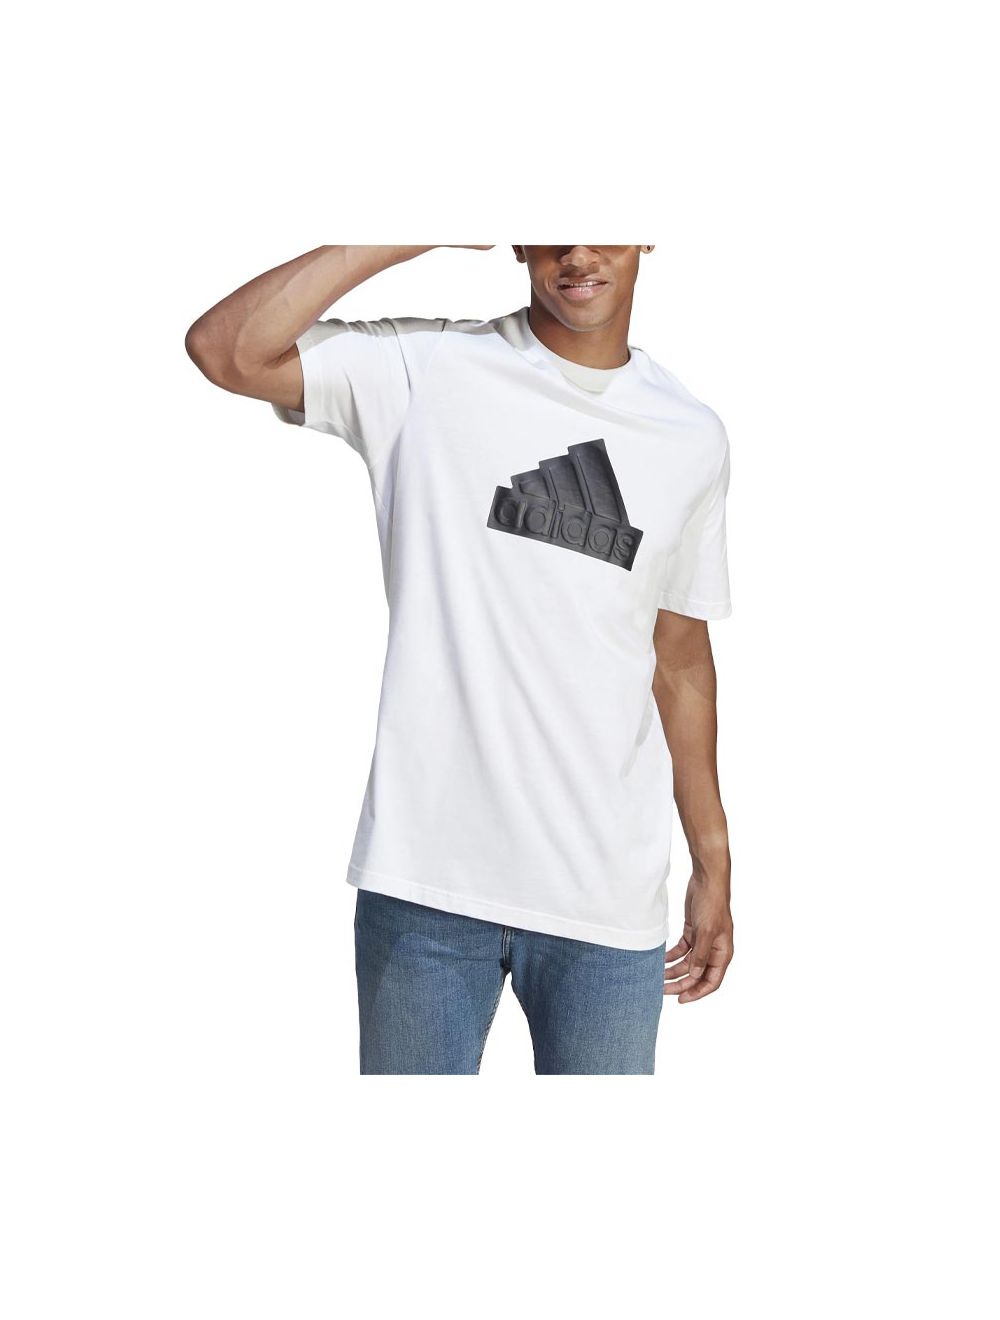 adidas Performance Icons Badge of Sport T-shirt Mens White